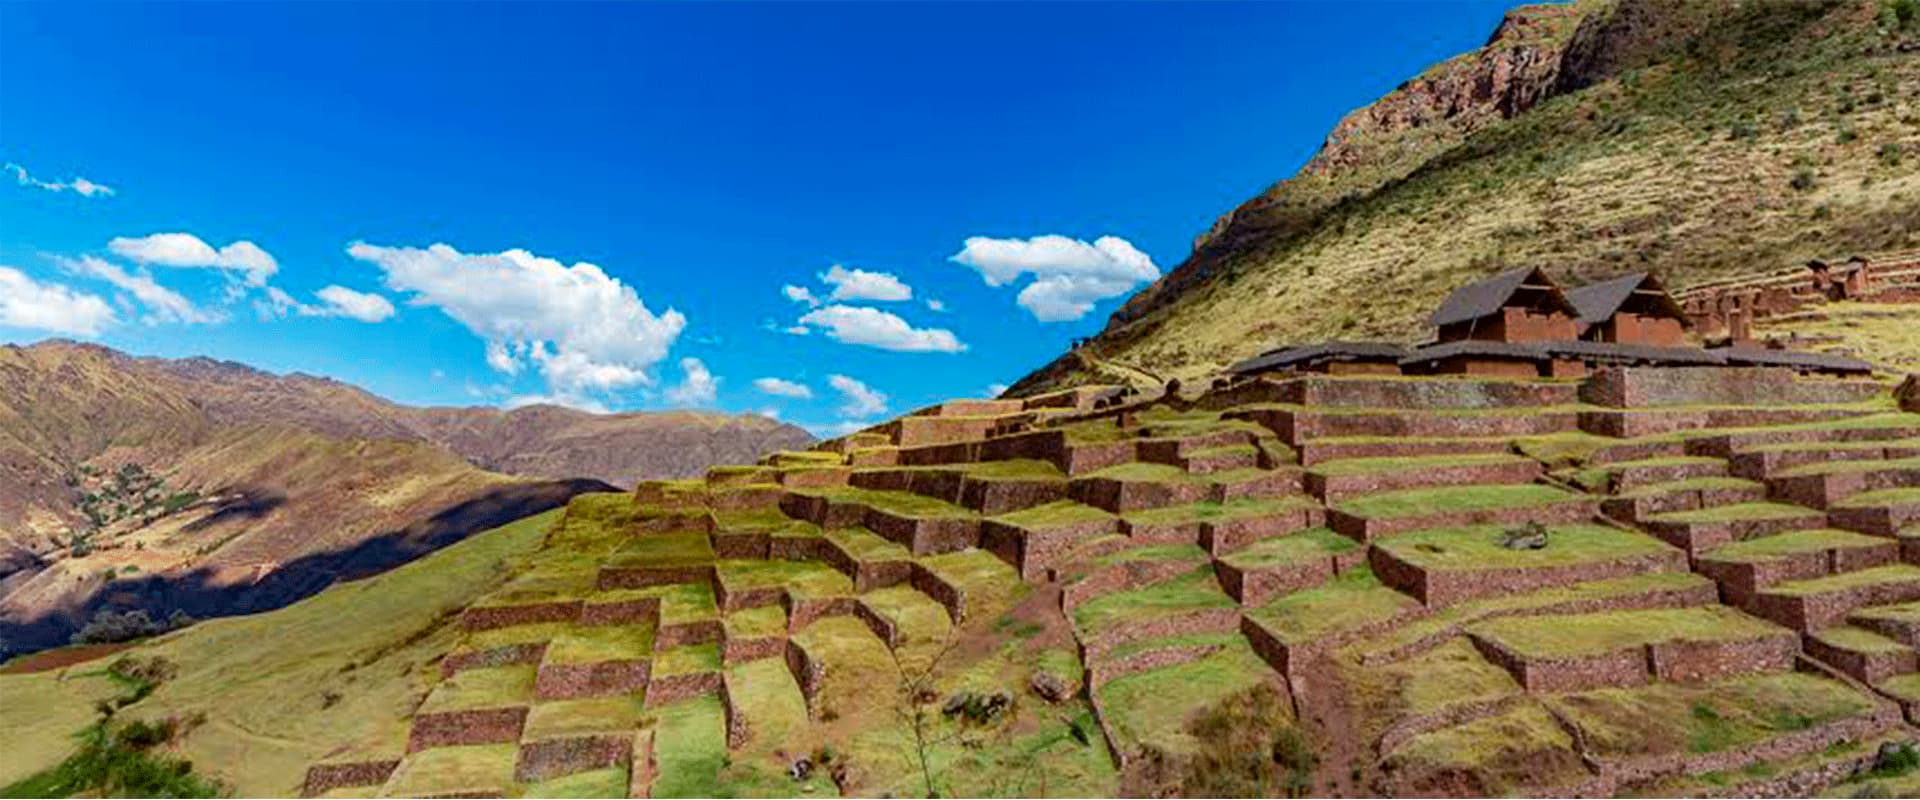 Tours: Huchuy Qosqo Trek to Machu Picchu 3D/2N